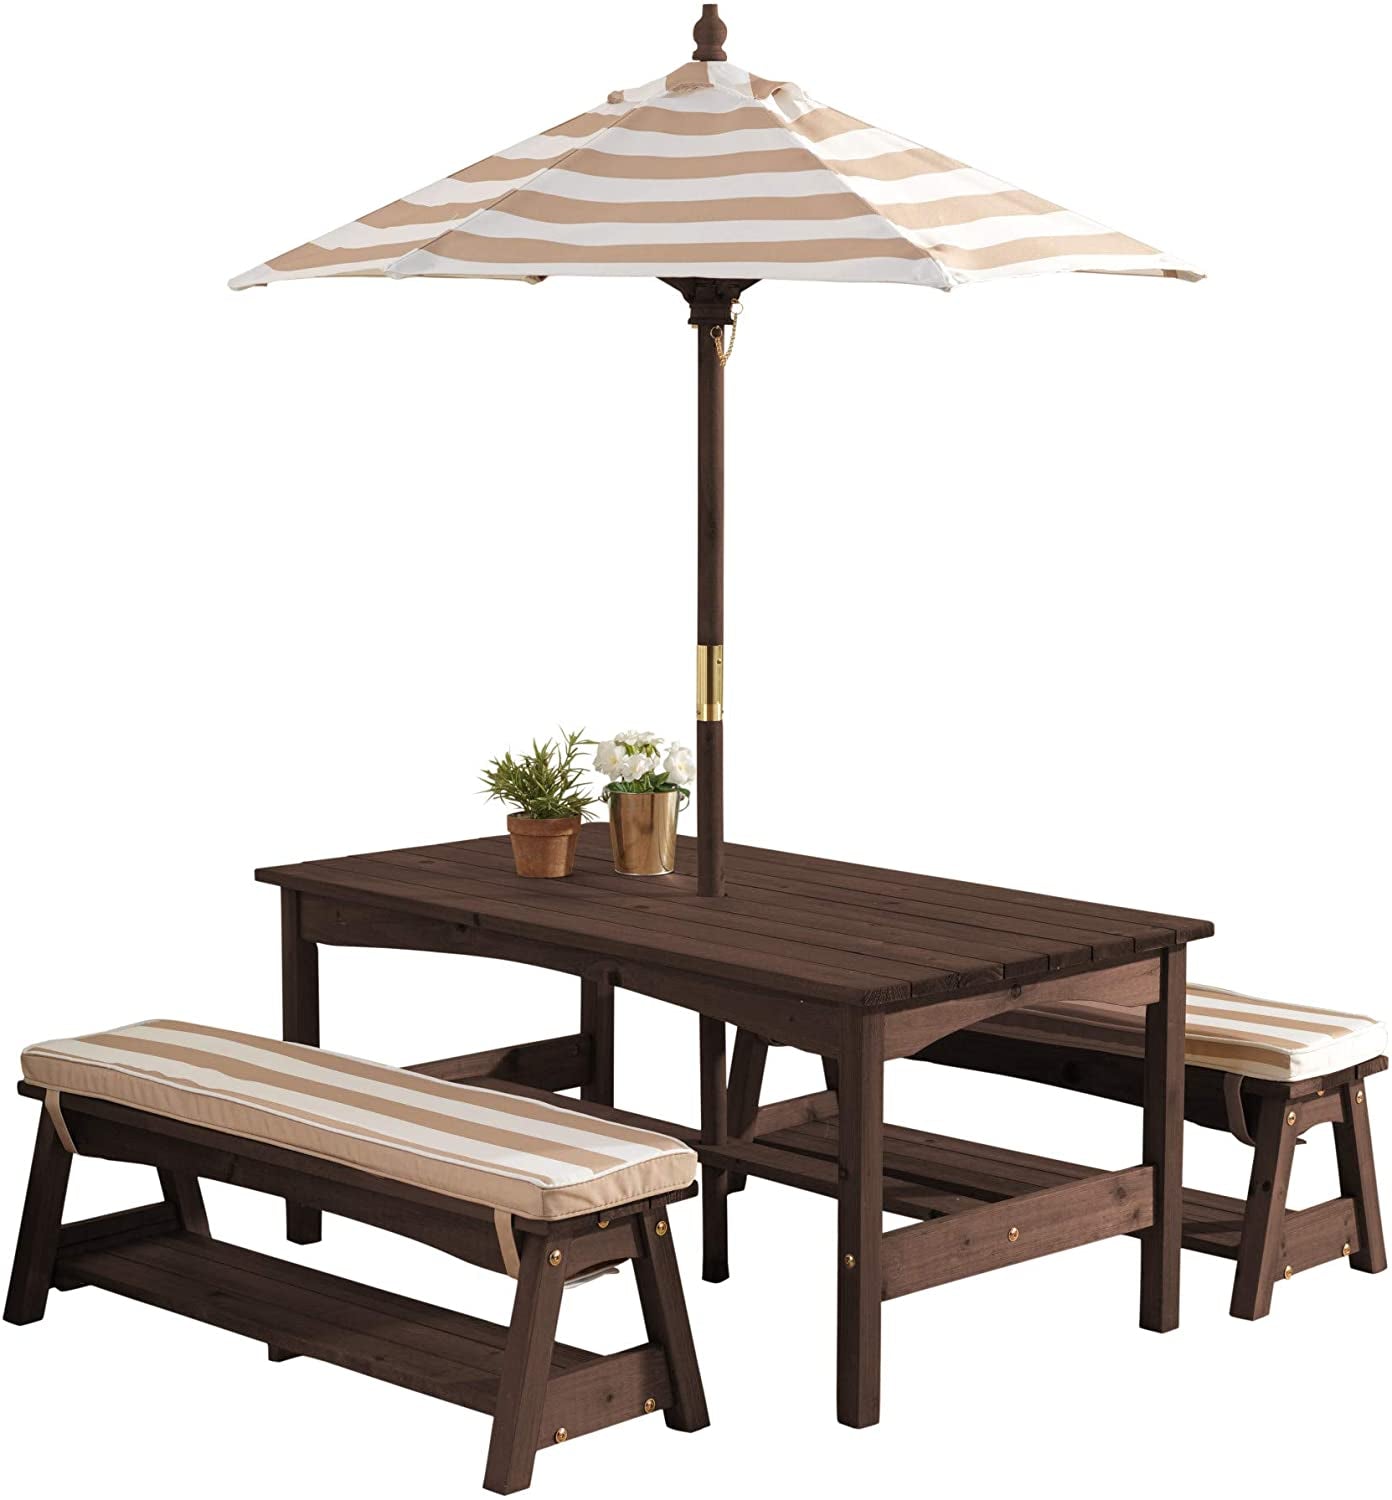 KidKraft, Kidkraft Outdoor Table & Bench Set with Cushions & Umbrella - Oatmeal & White Stripes, Natural